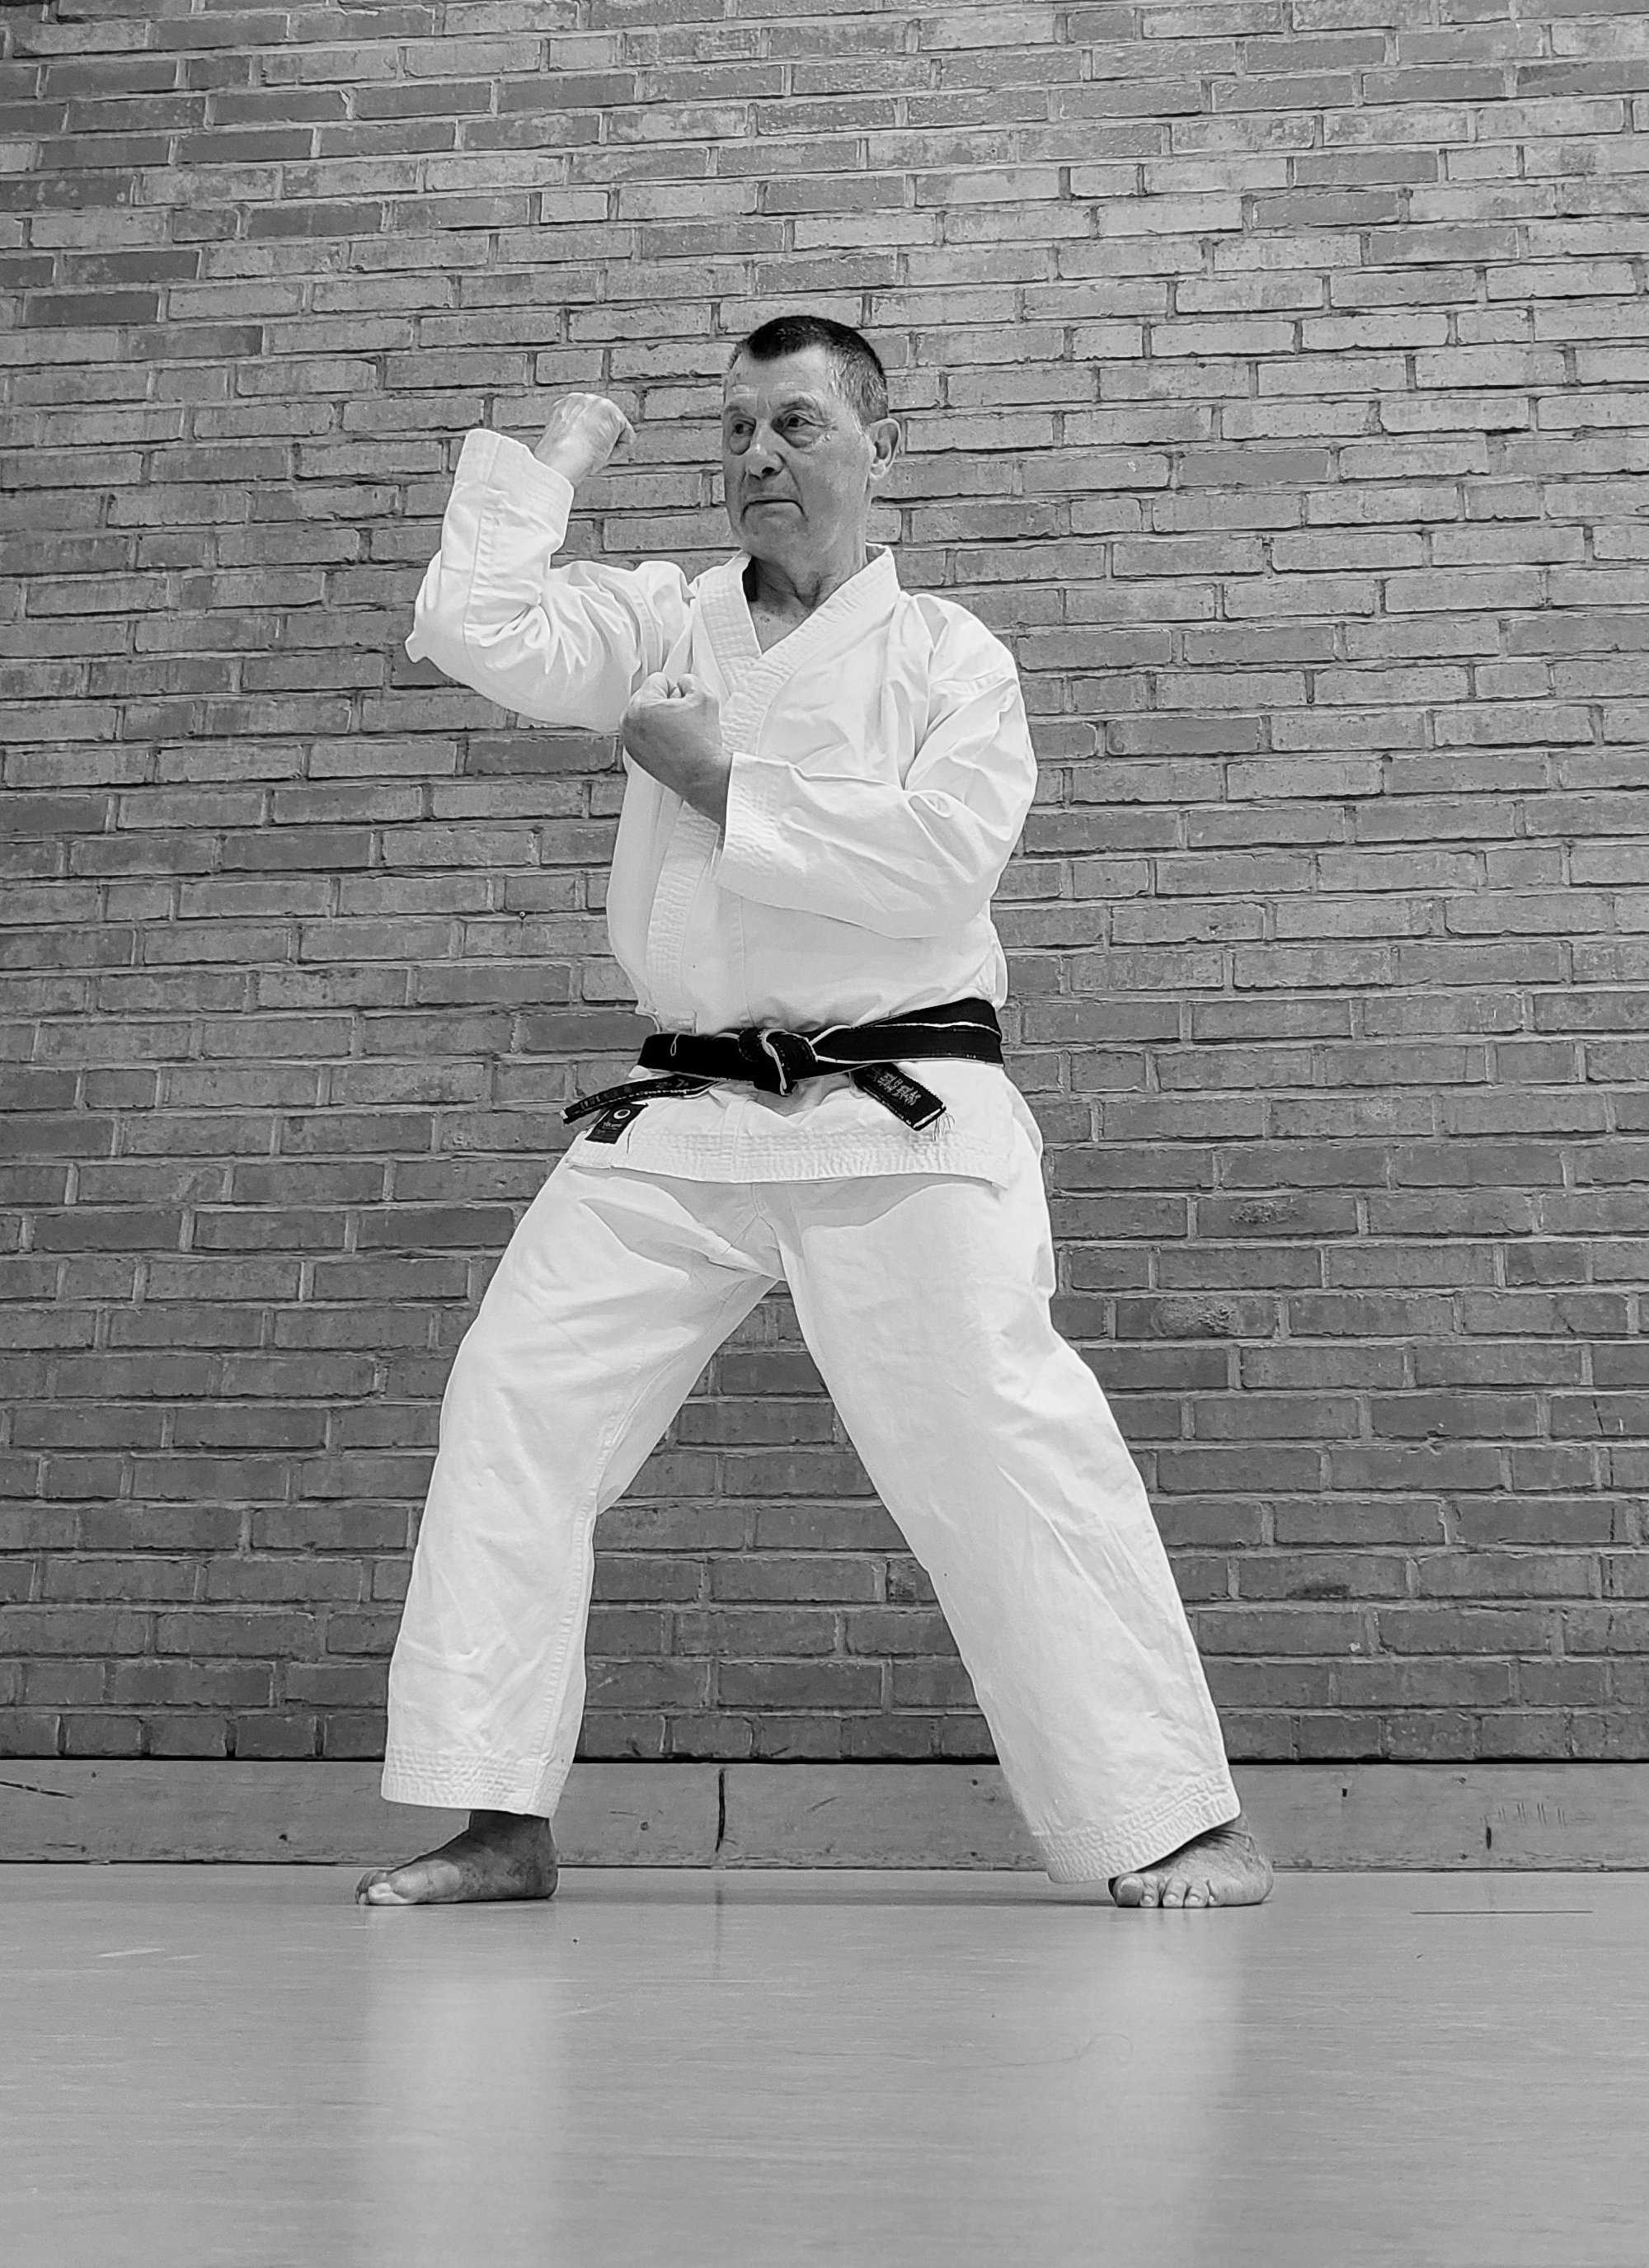 Wado-Ryu Karate Lehrer Robert Hampel